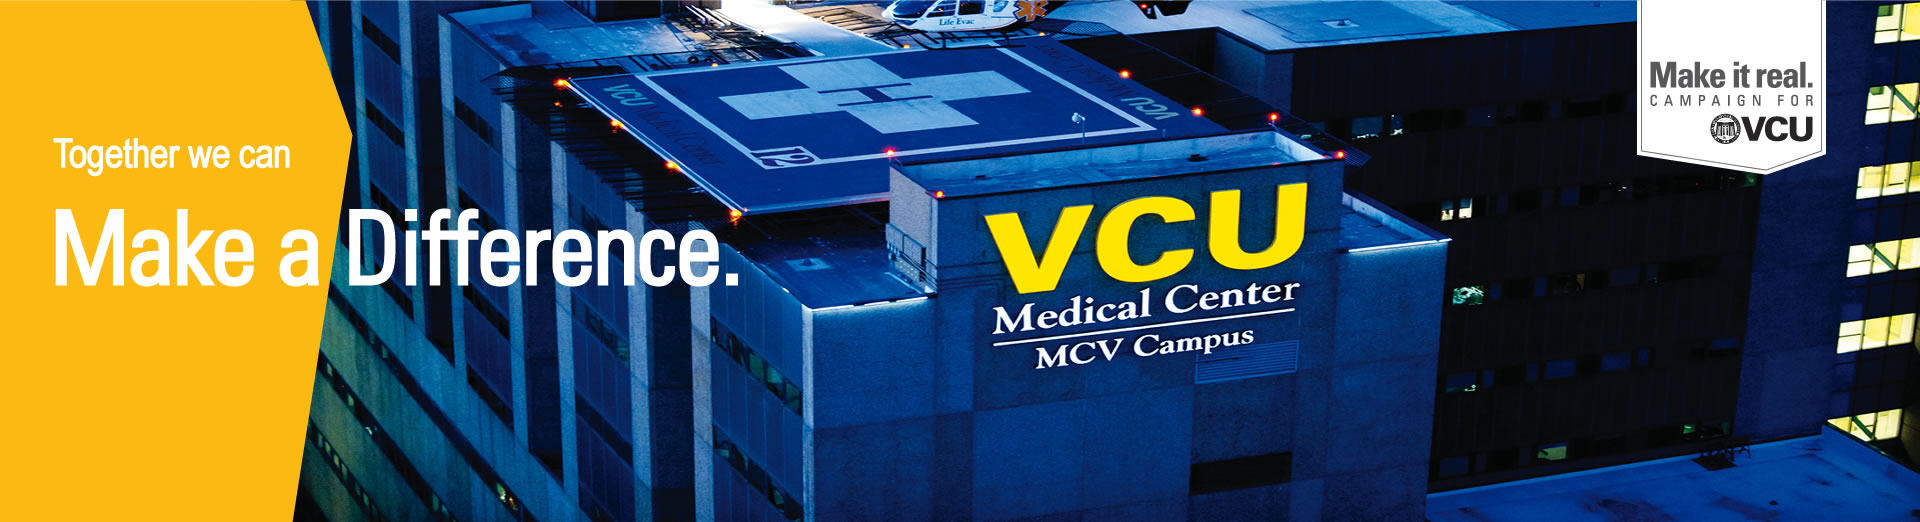 The VCU Medical Logo displayed on the VCU Medical Building.